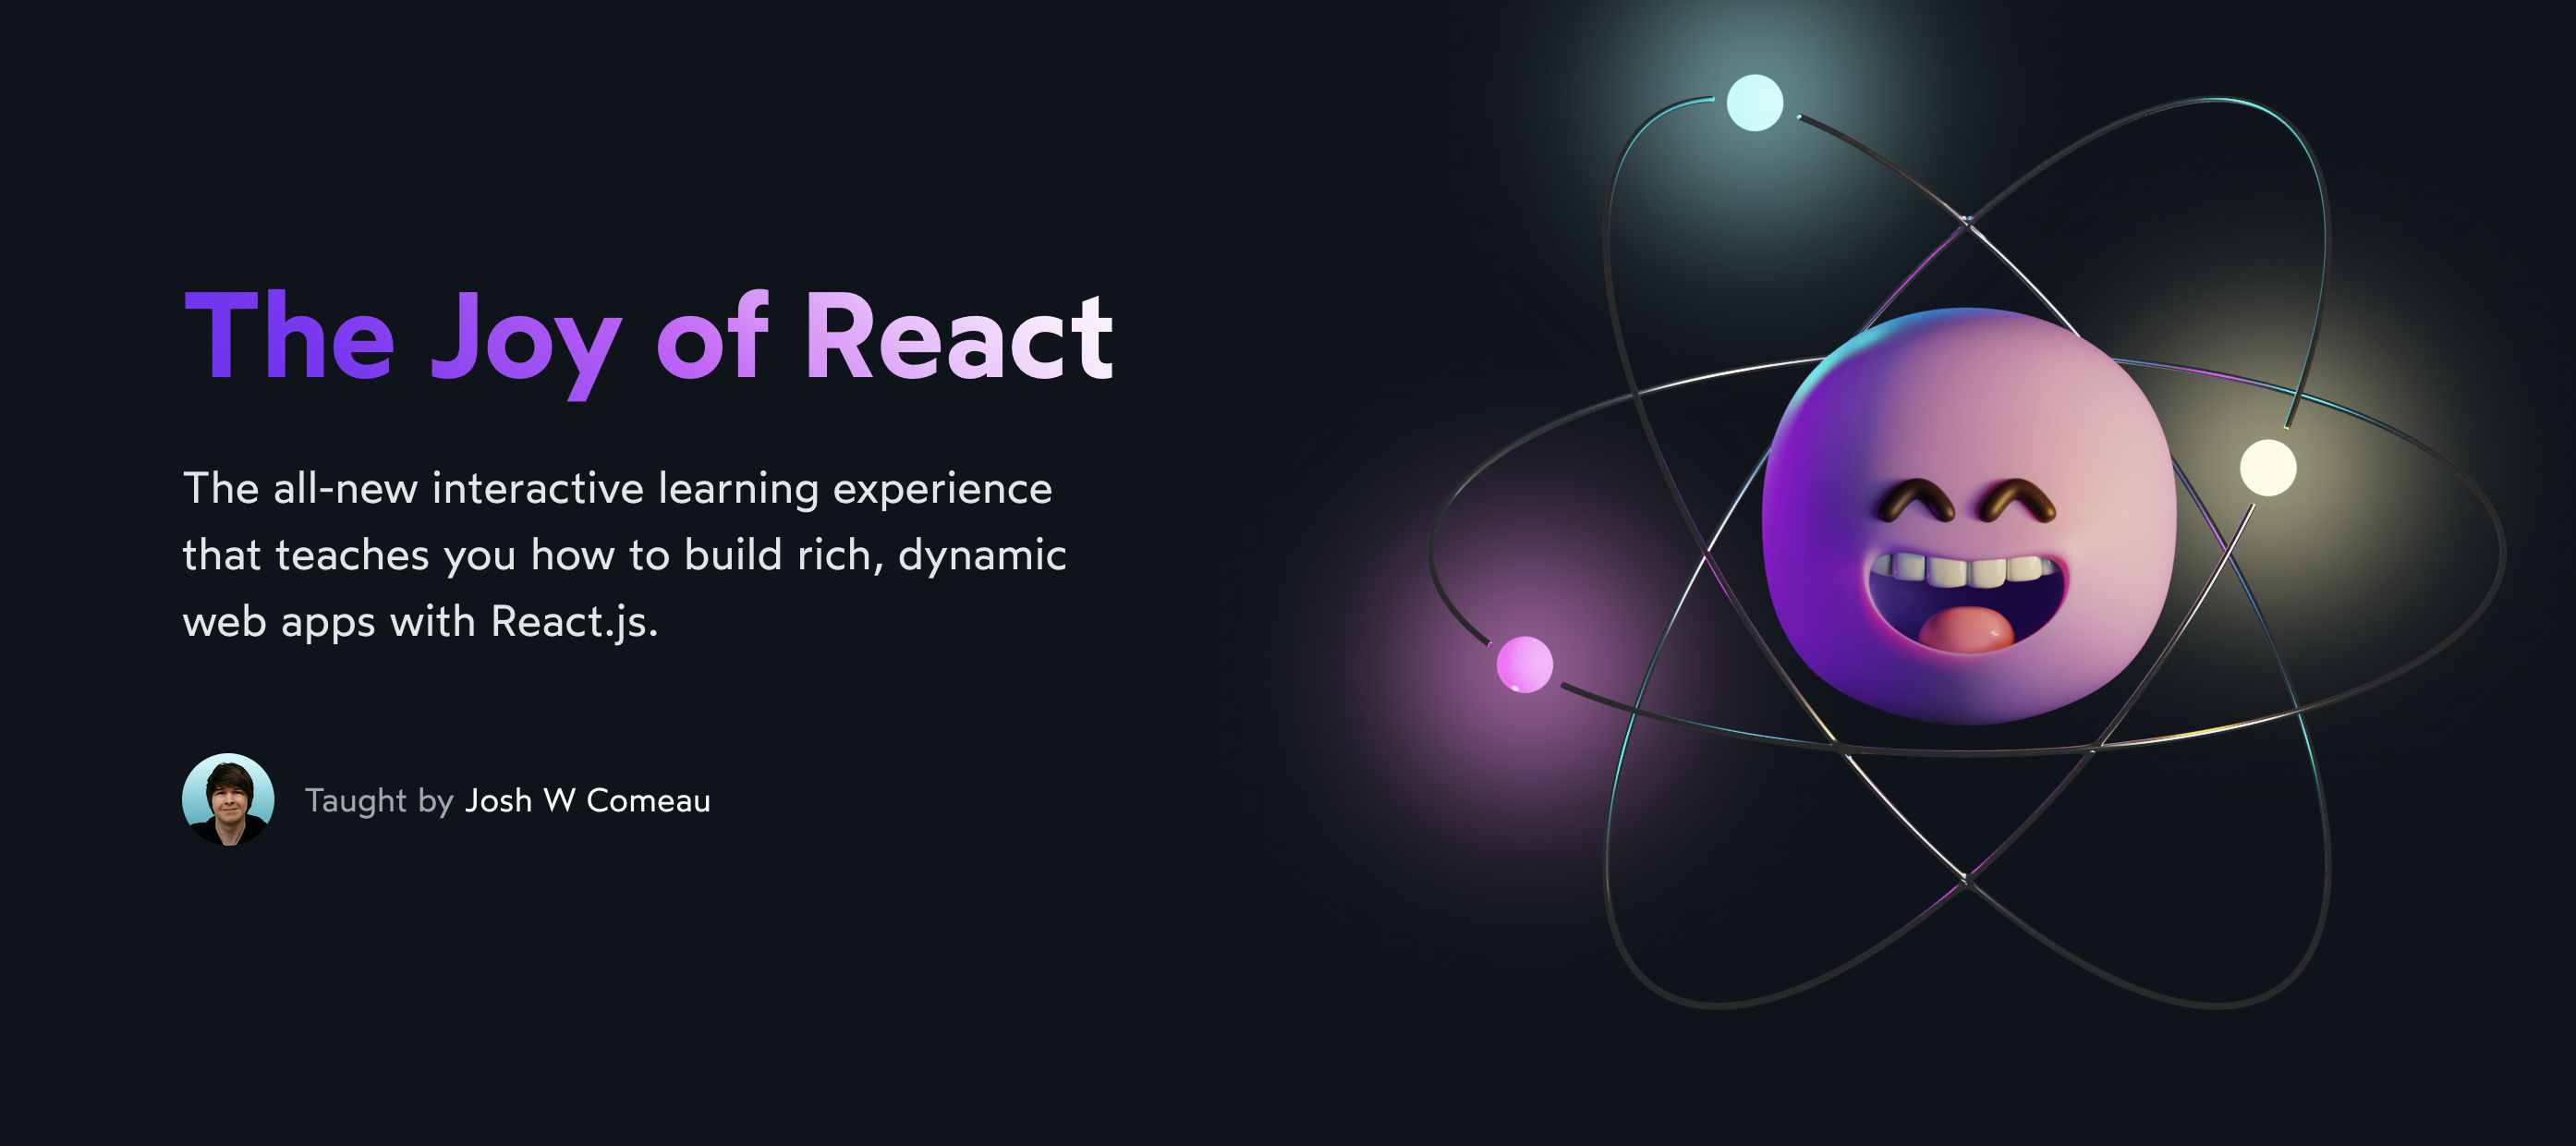 Visit the “Joy of React” homepage